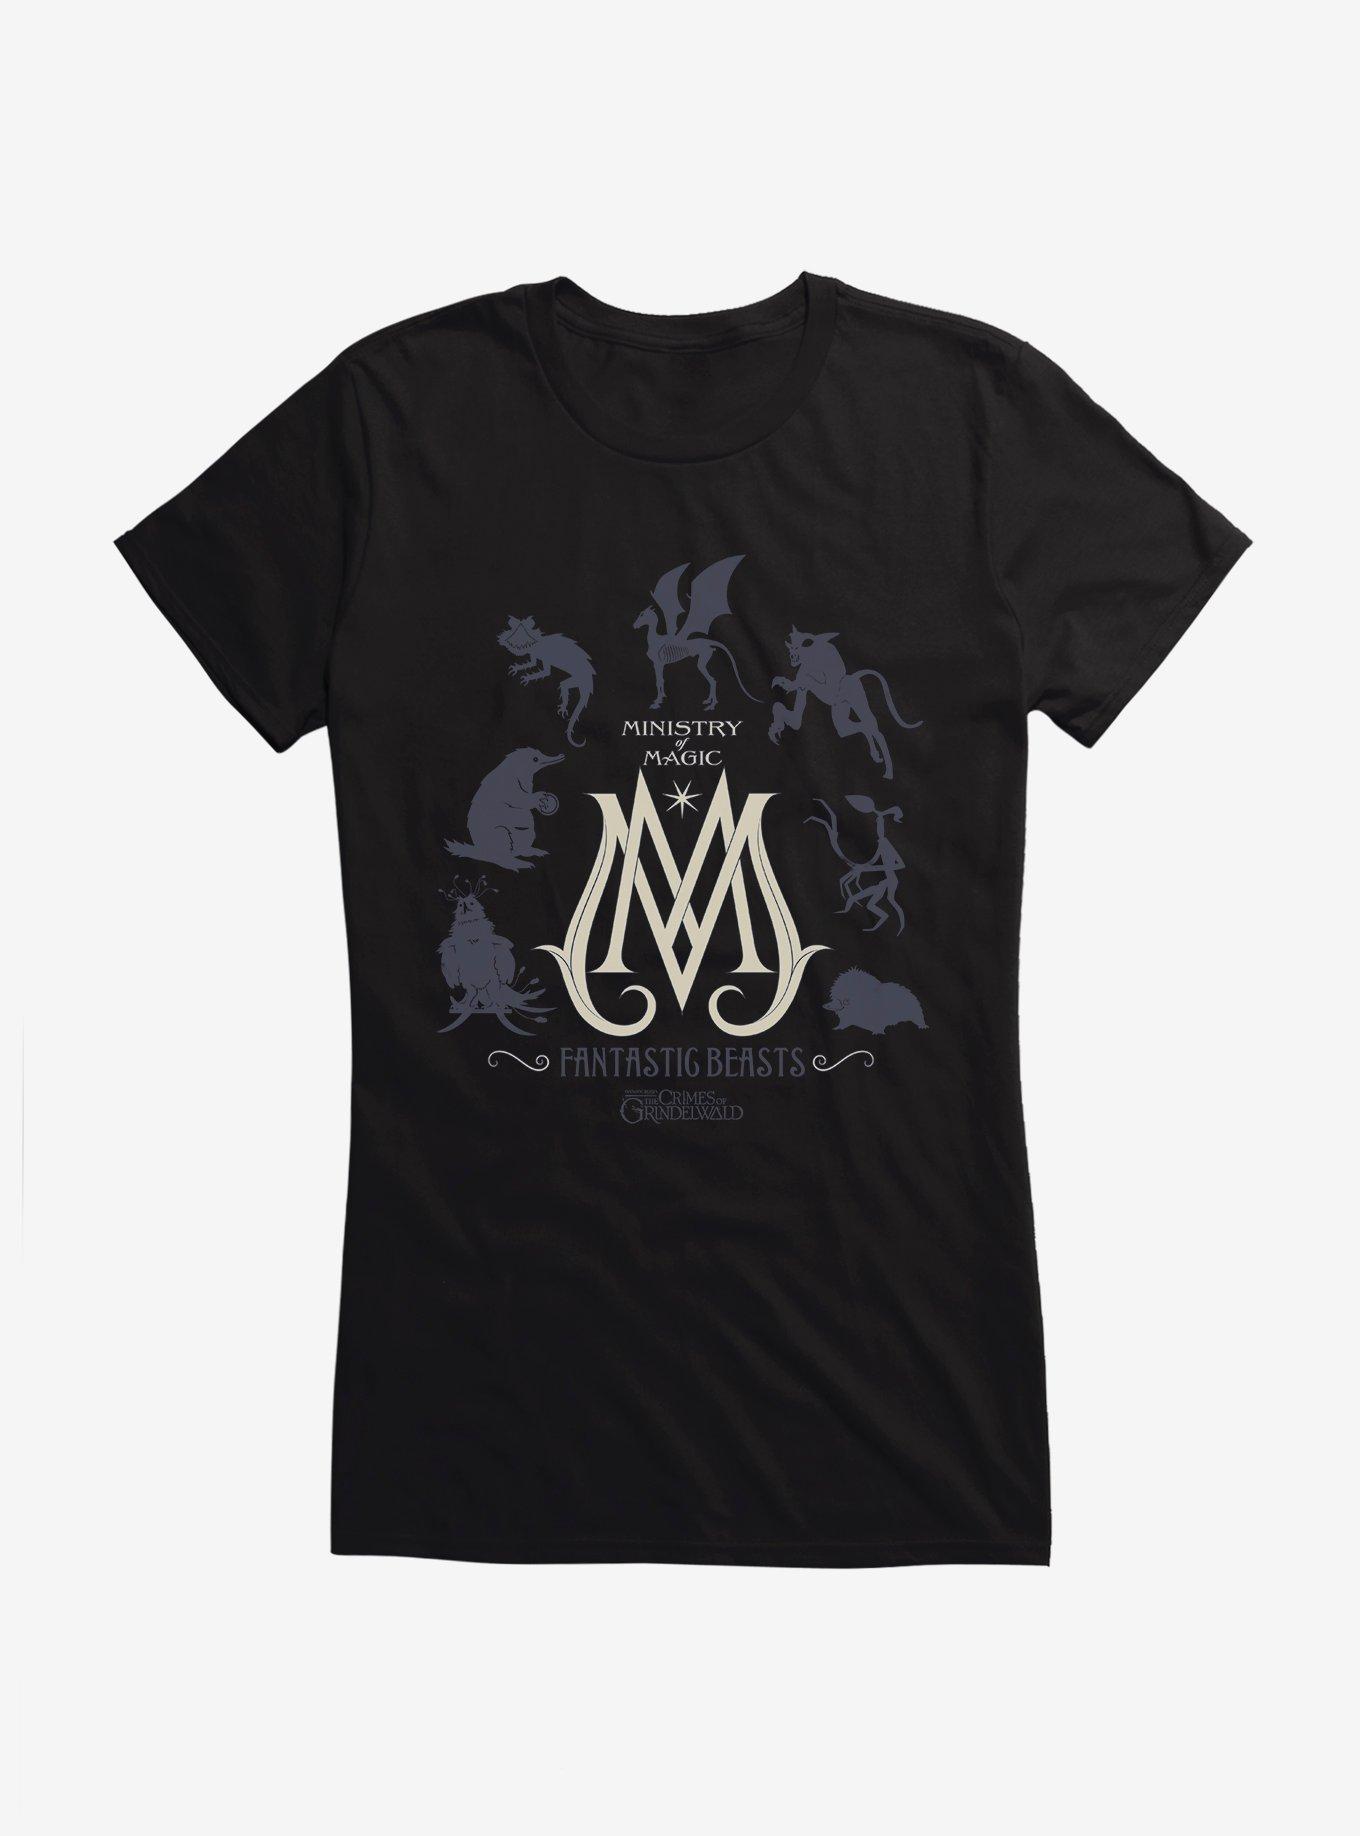 Fantastic Beasts Ministry of Magic Girls T-Shirt